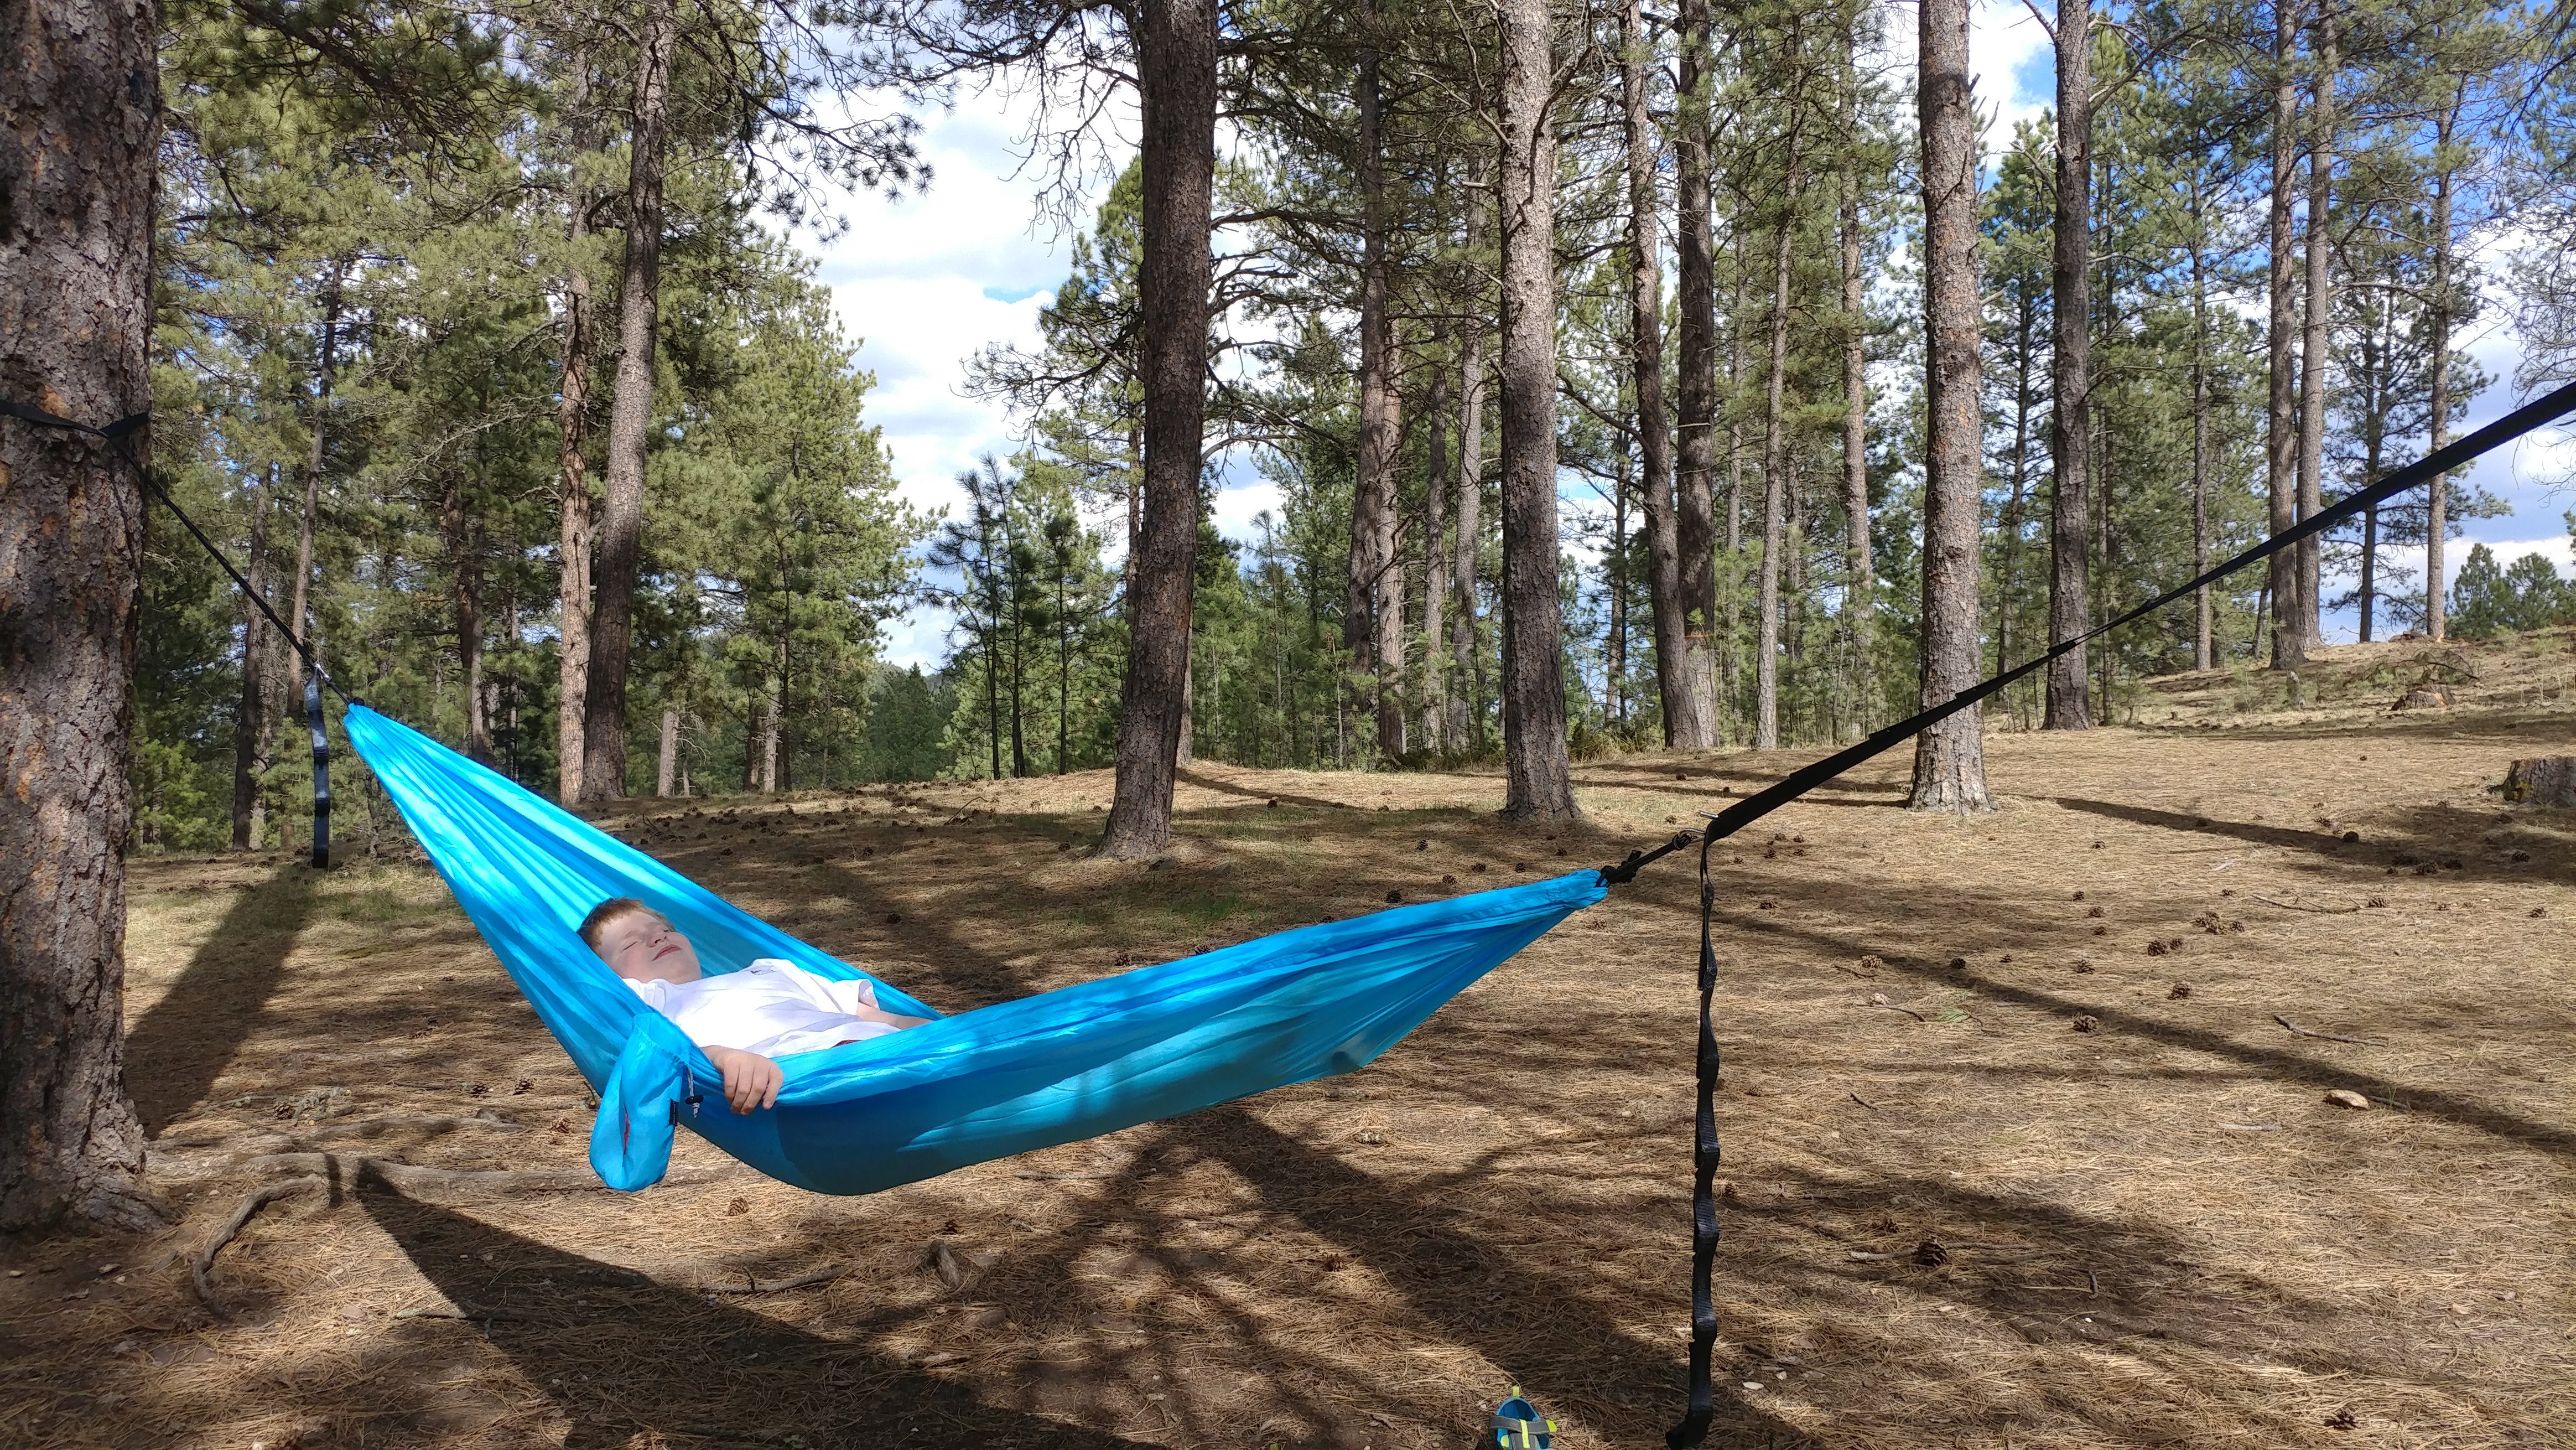 Plenty of space to hang your hammock!